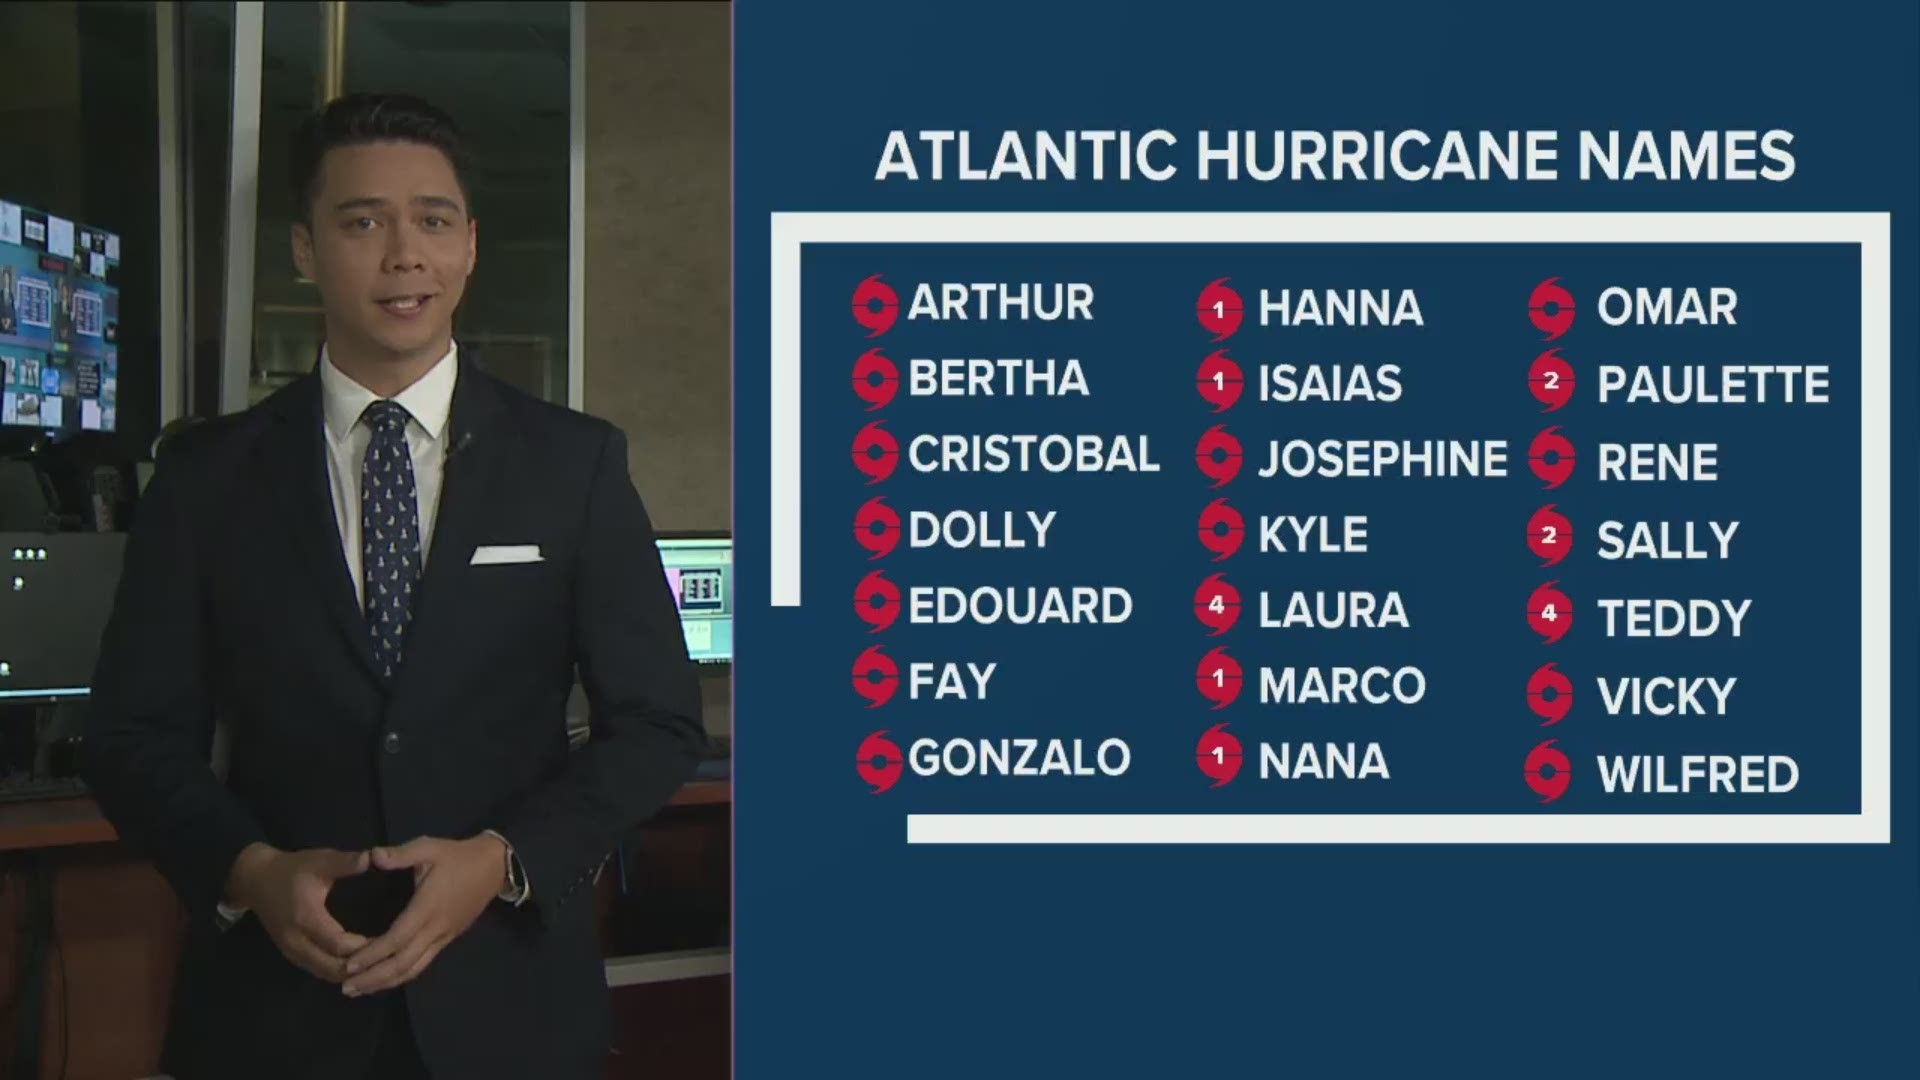 2020 Hurricane Season digs into Greek Alphabet for Atlantic Hurricane names.